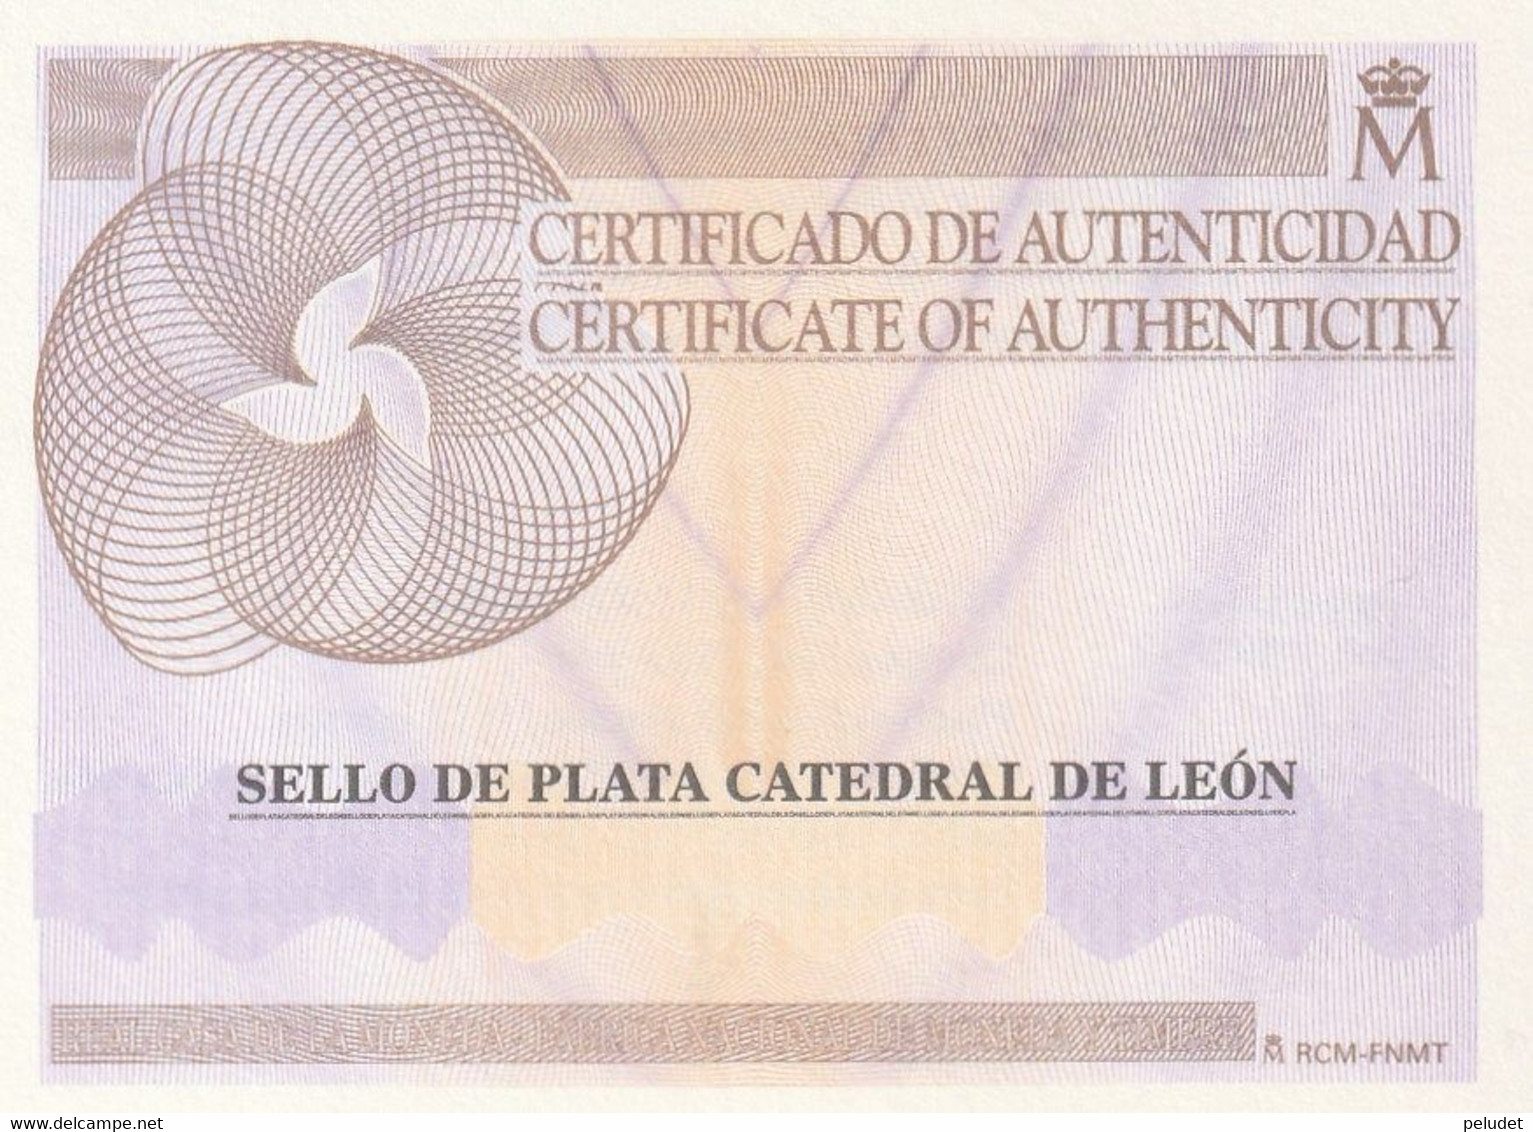 Spain - Espagne, 2012 Catedrales - Catedral León - Cathedrals - Cathedral Leon, Prueba Artista - Artist Proof Stamp(1) - Ensayos & Reimpresiones